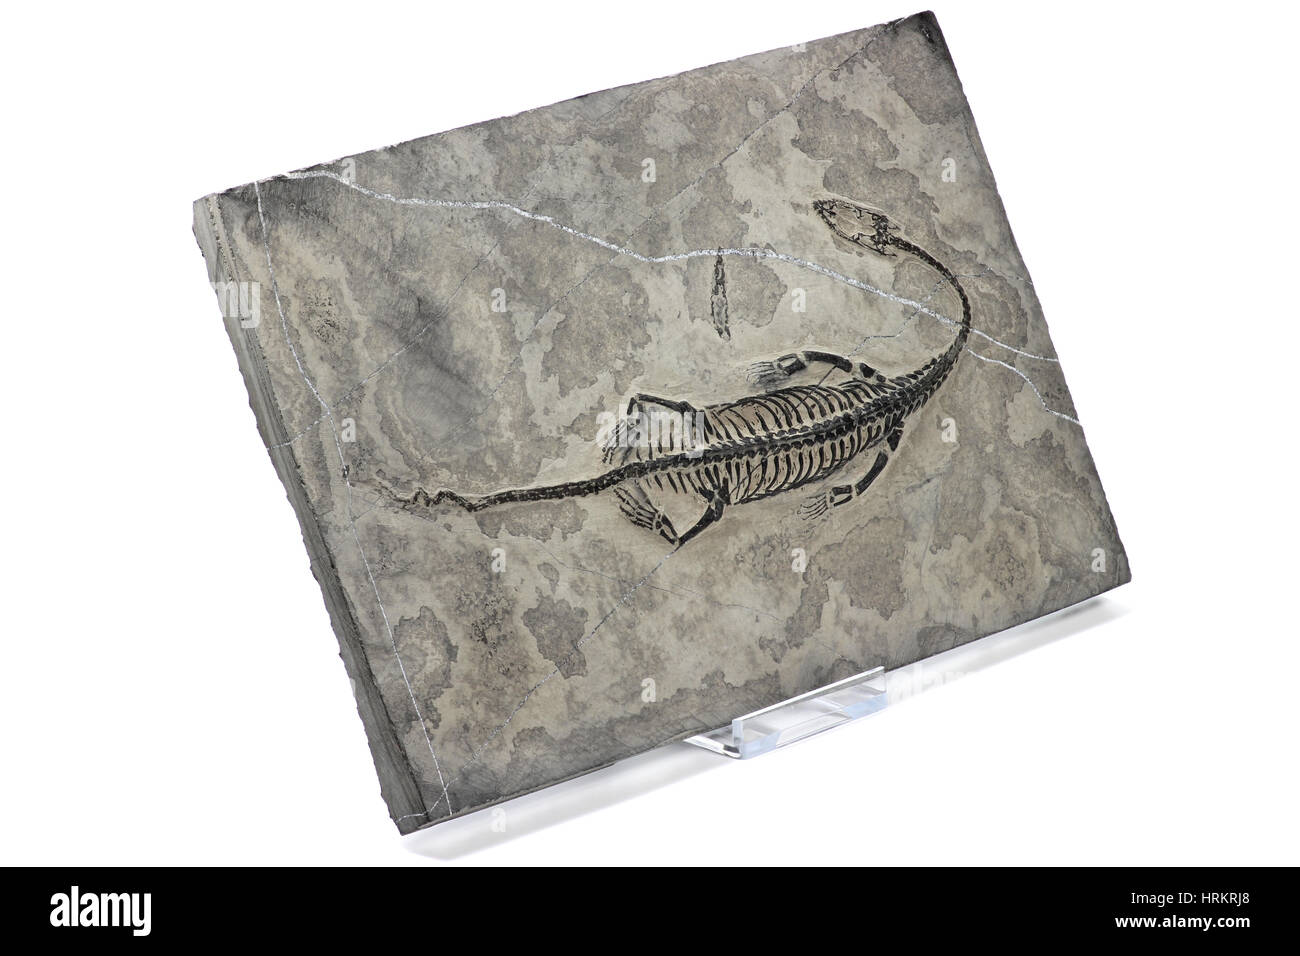 Keichousaurus originale hui trovati fossili in Guizhou Xingyi/ Cina isolato su sfondo bianco Foto Stock